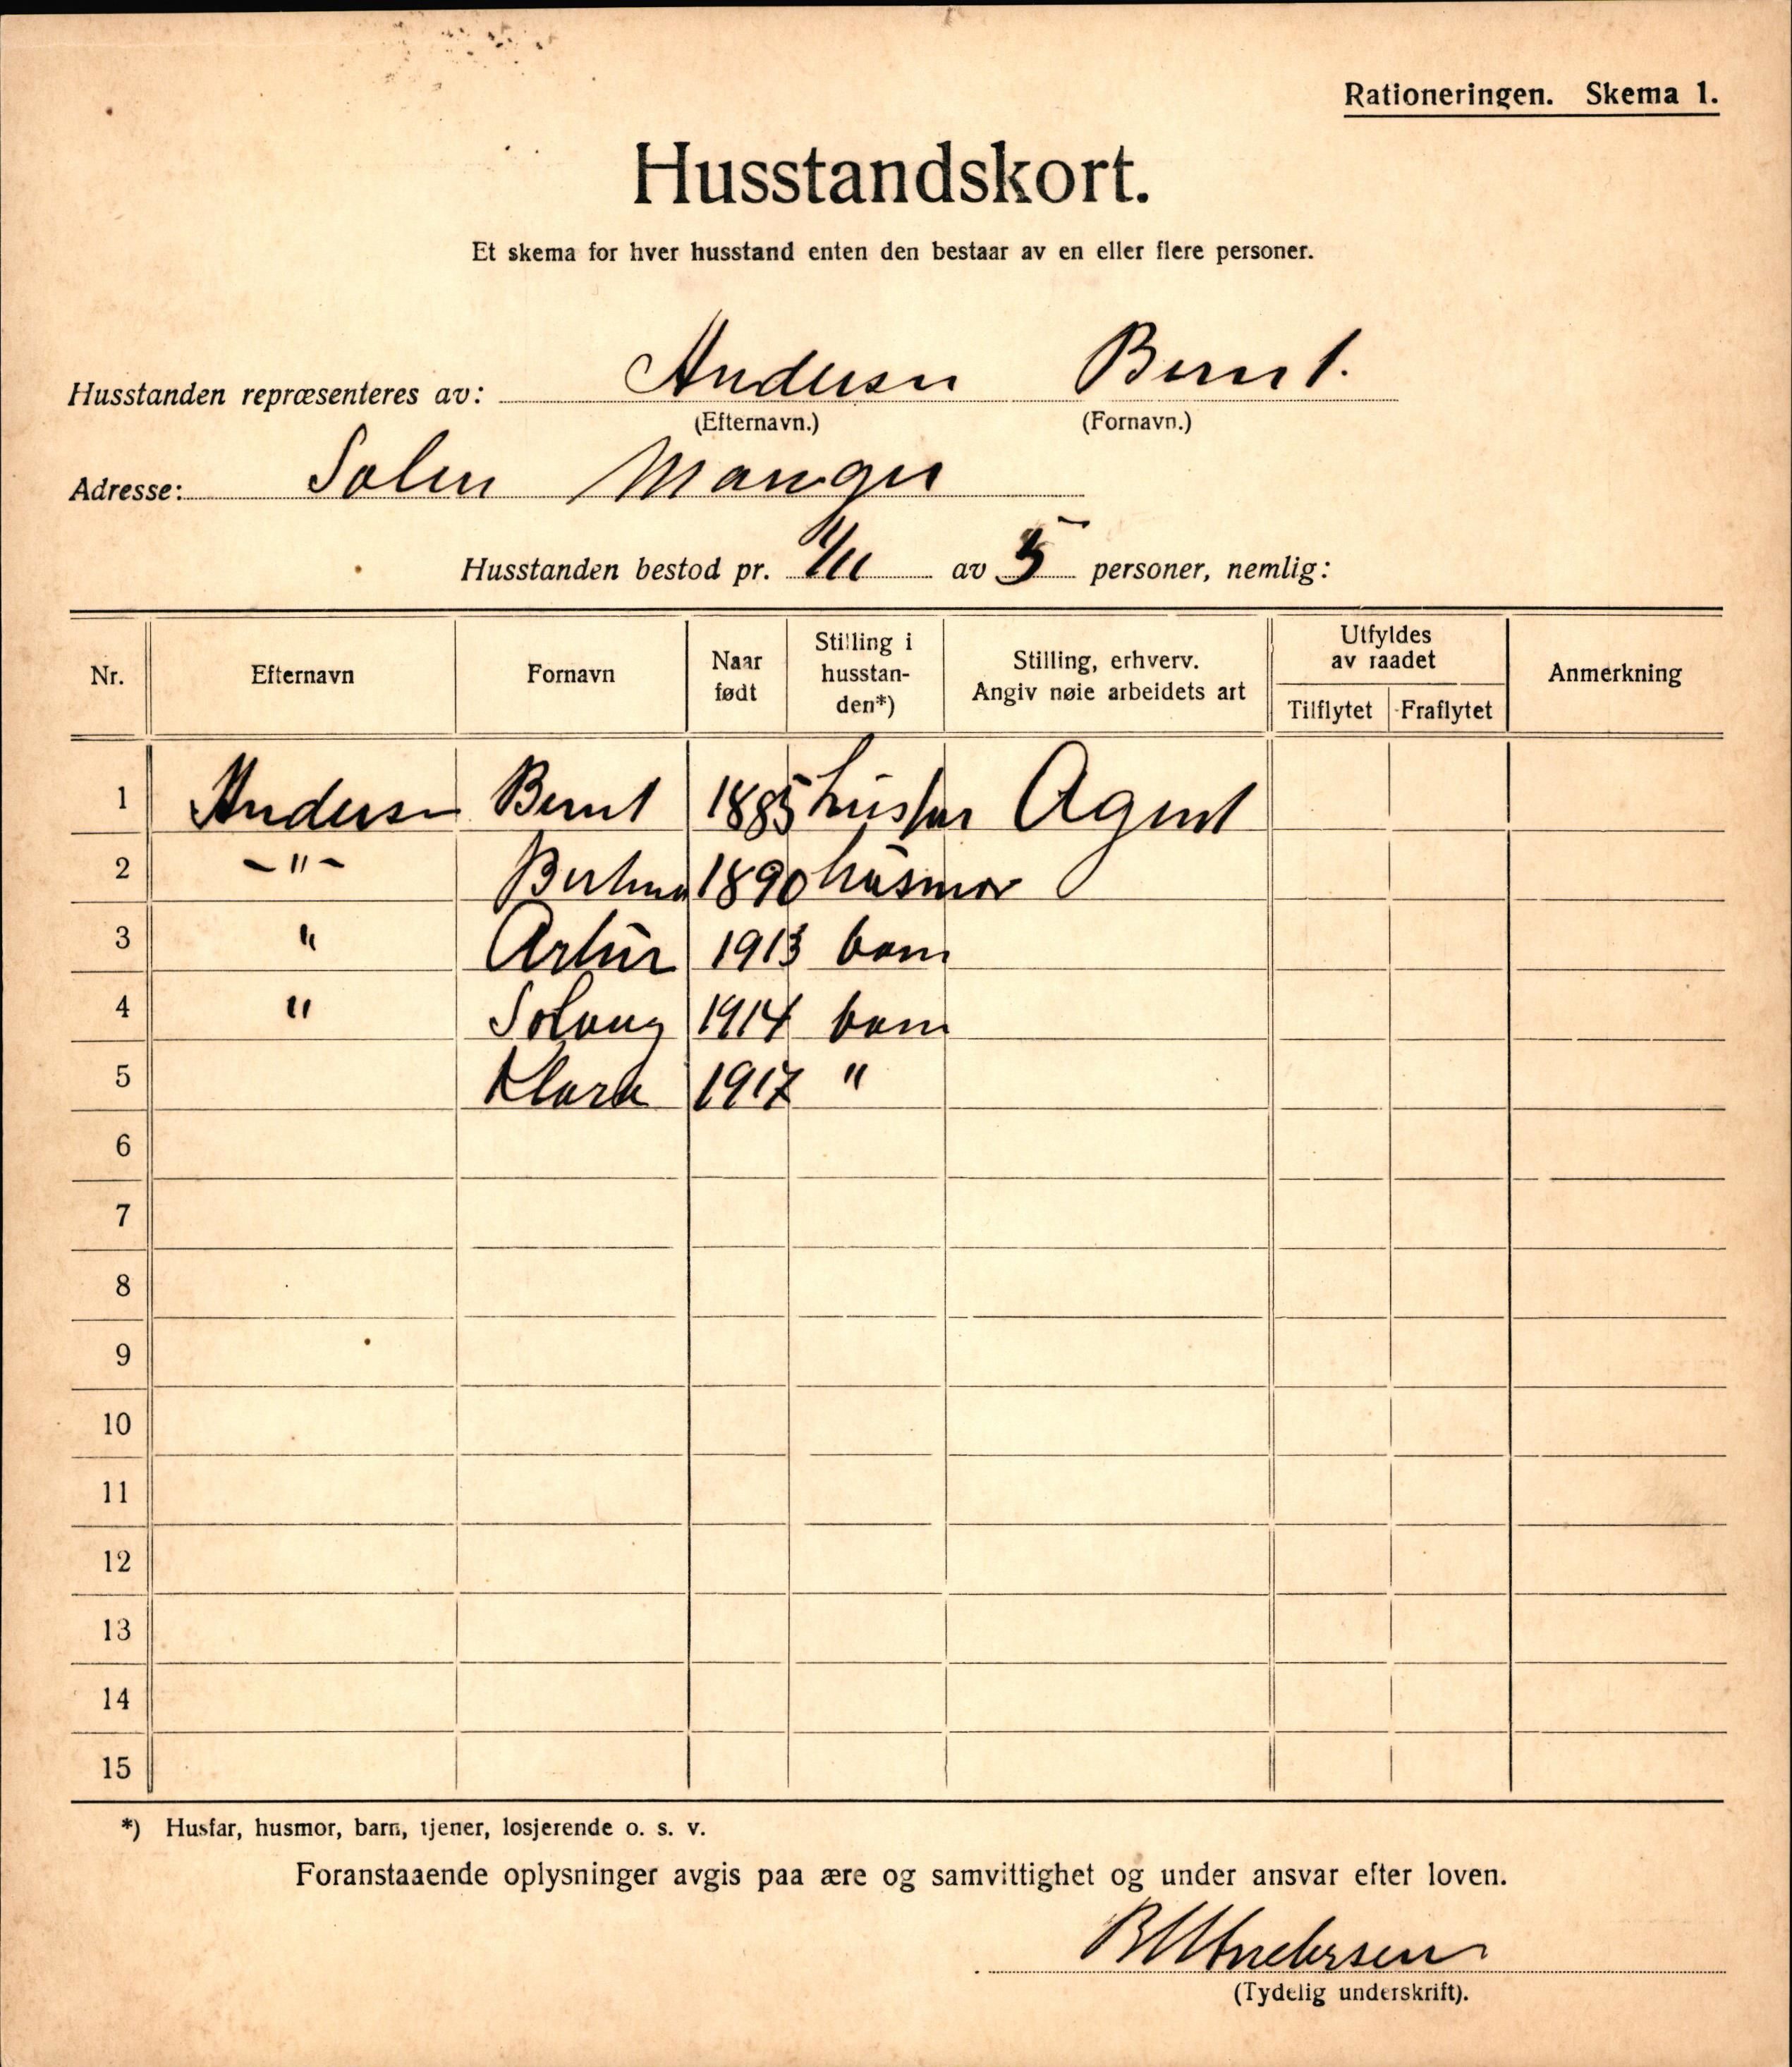 IKAH, Manger kommune, Provianteringsrådet, Husstander per 01.11.1917, 1917, p. 1